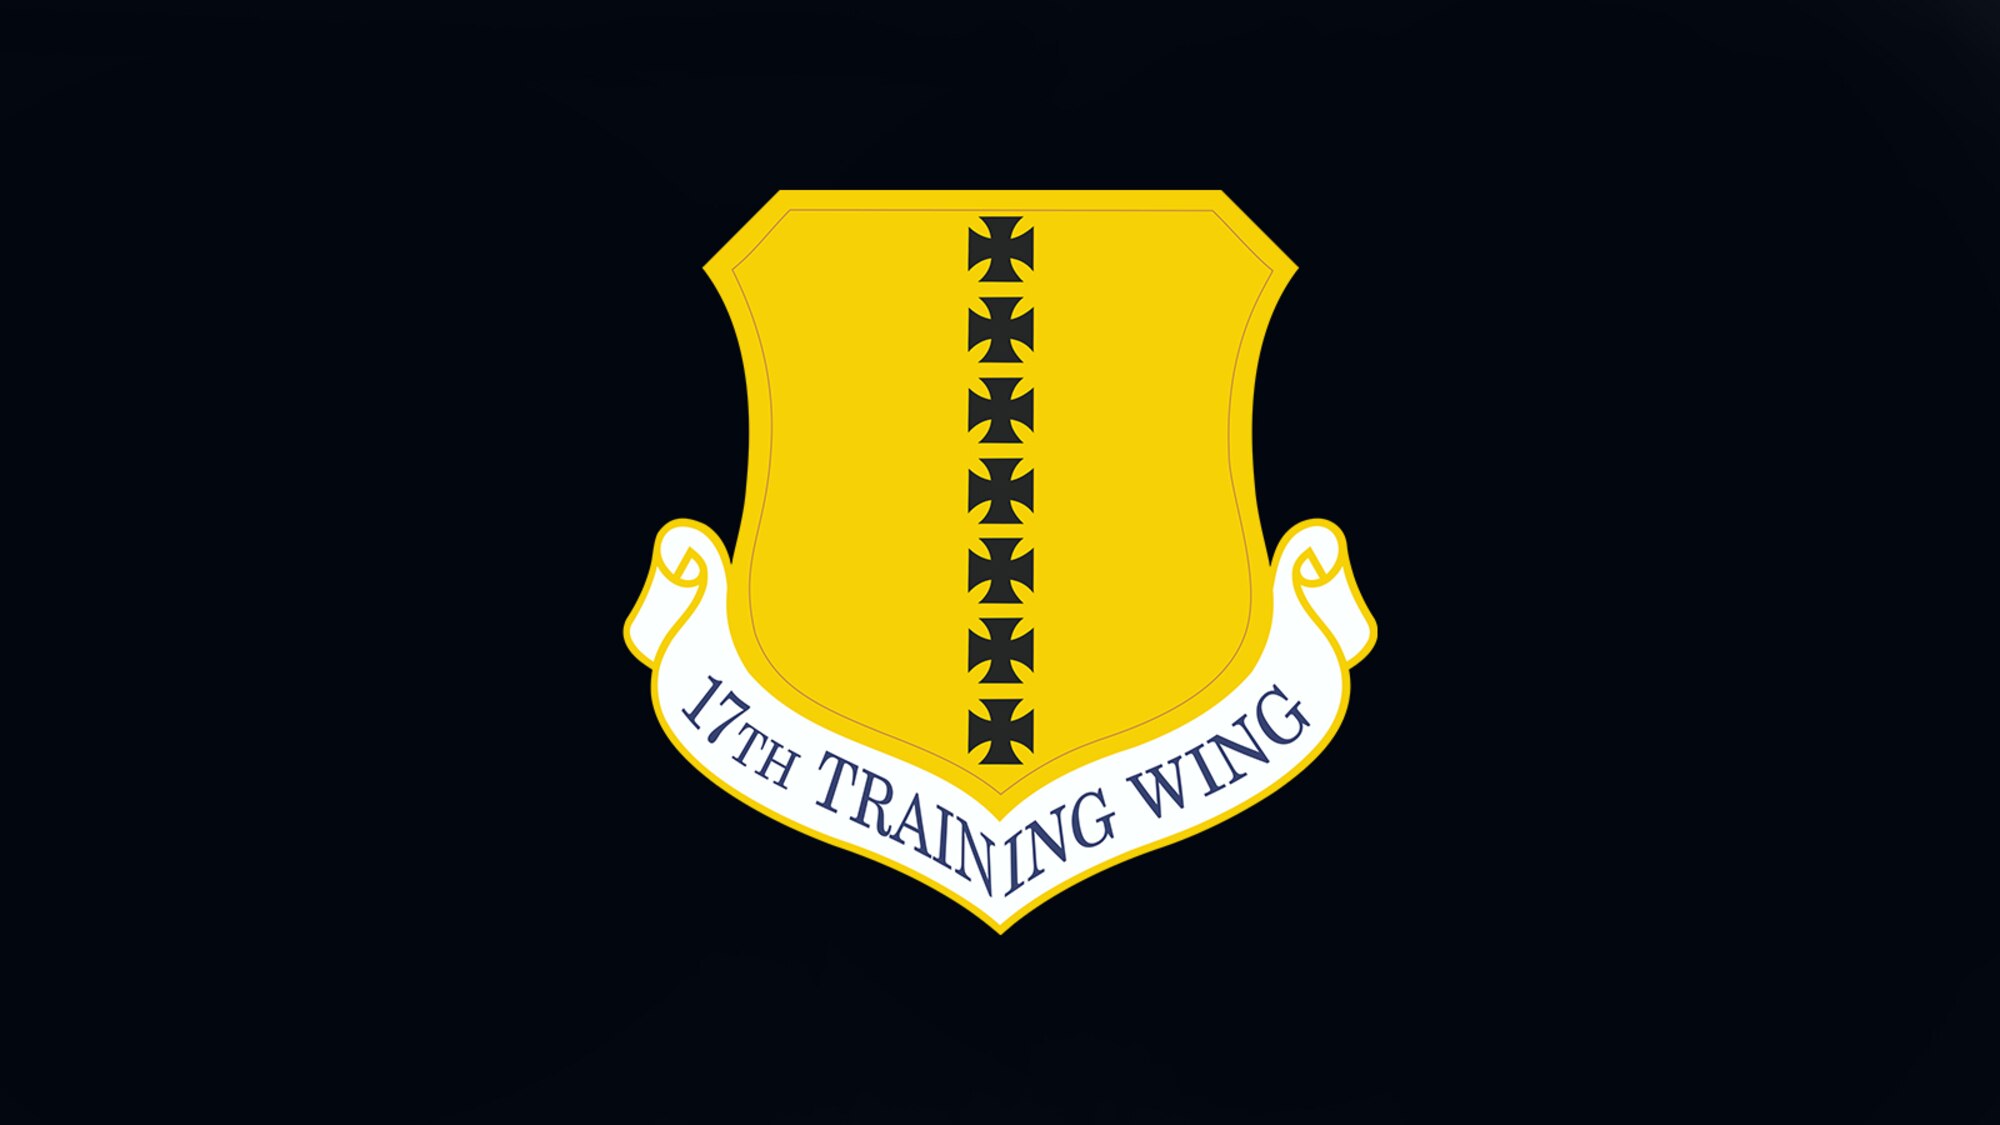 17th Training Wing emblem